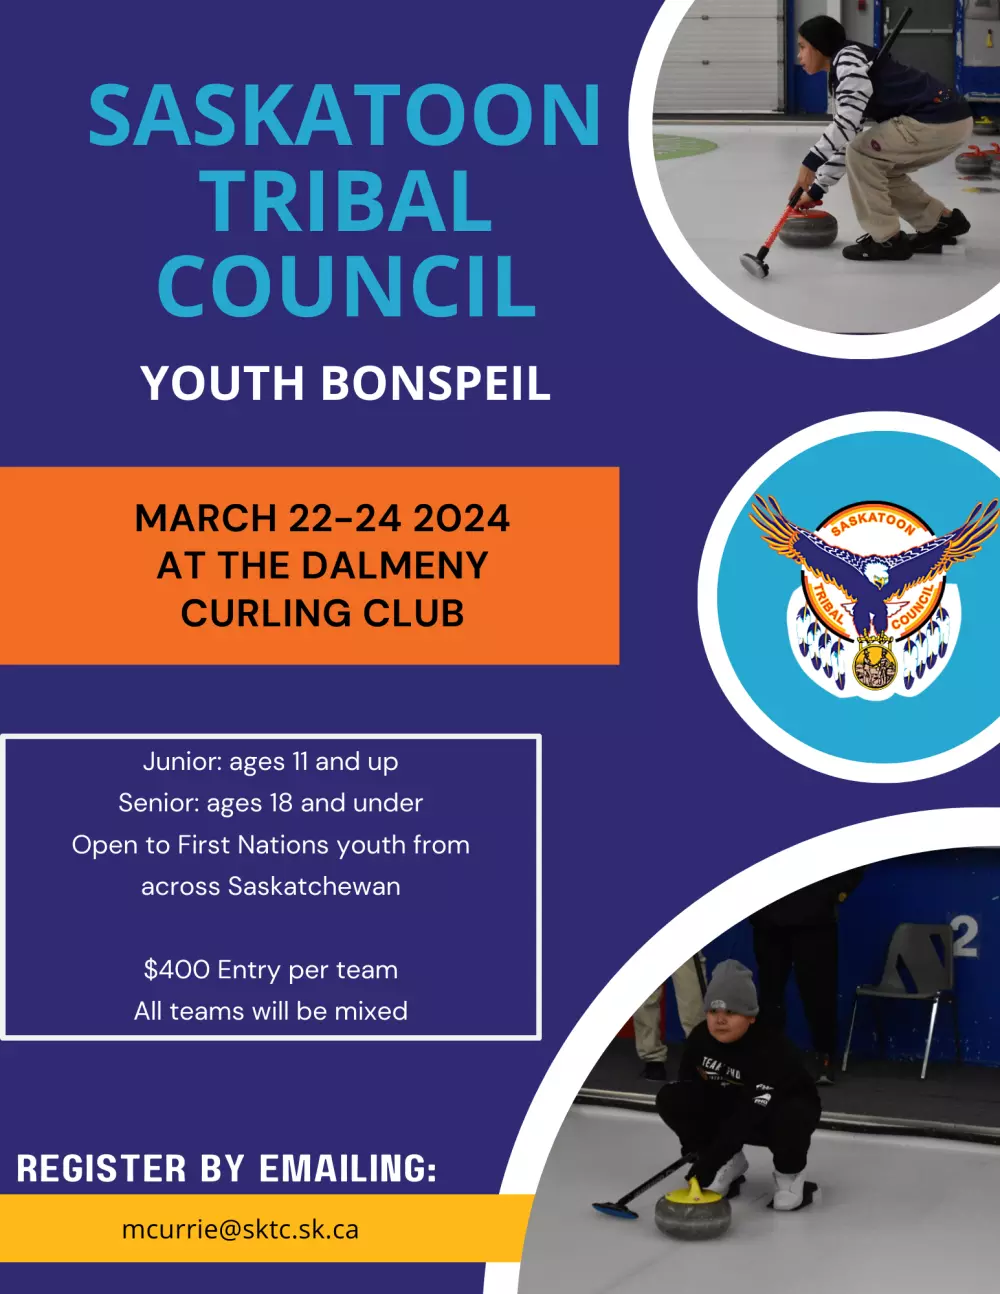 STC Youth Curling Bonspiel